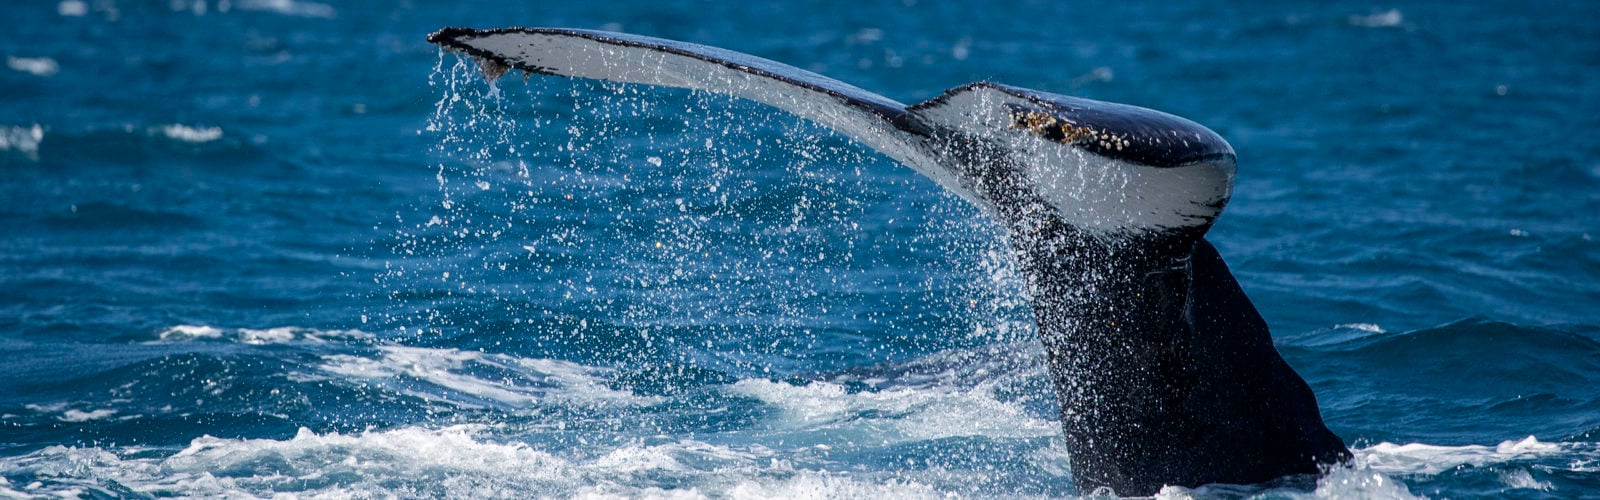 Humpback whale, Baleine à bosse